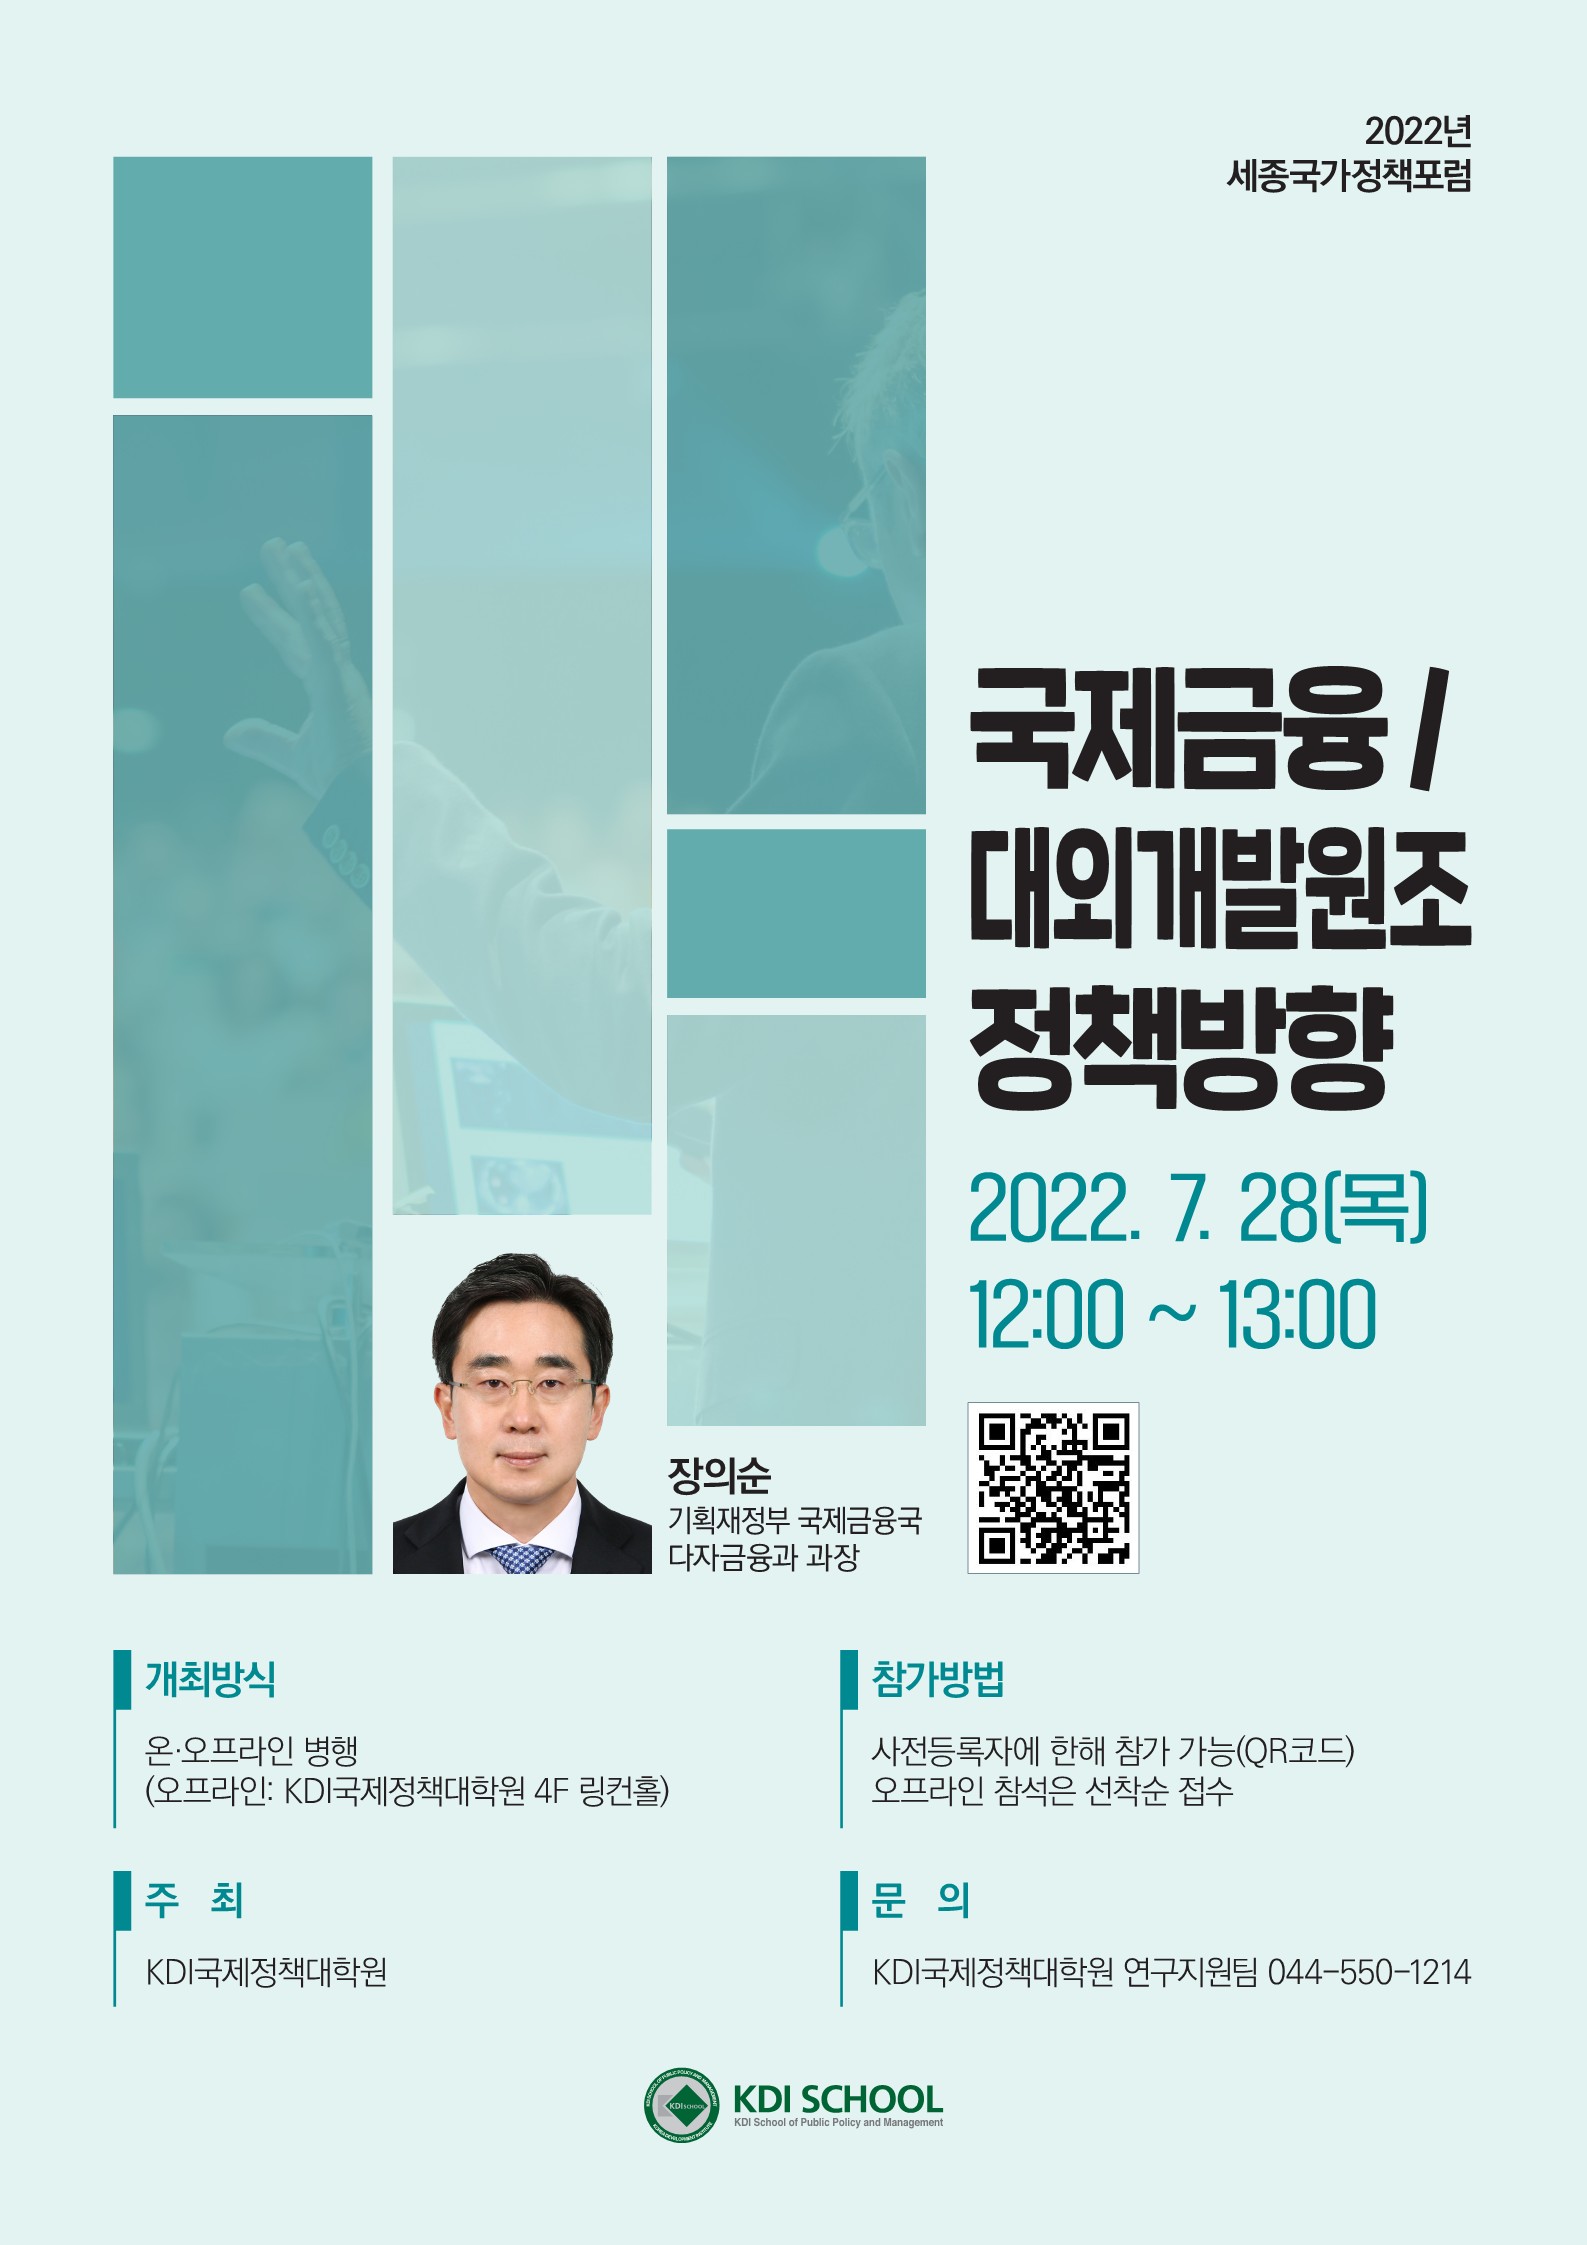 [Invitation] 제6회 세종국가정책포럼 개최(7.28(목)) 오후 12시)